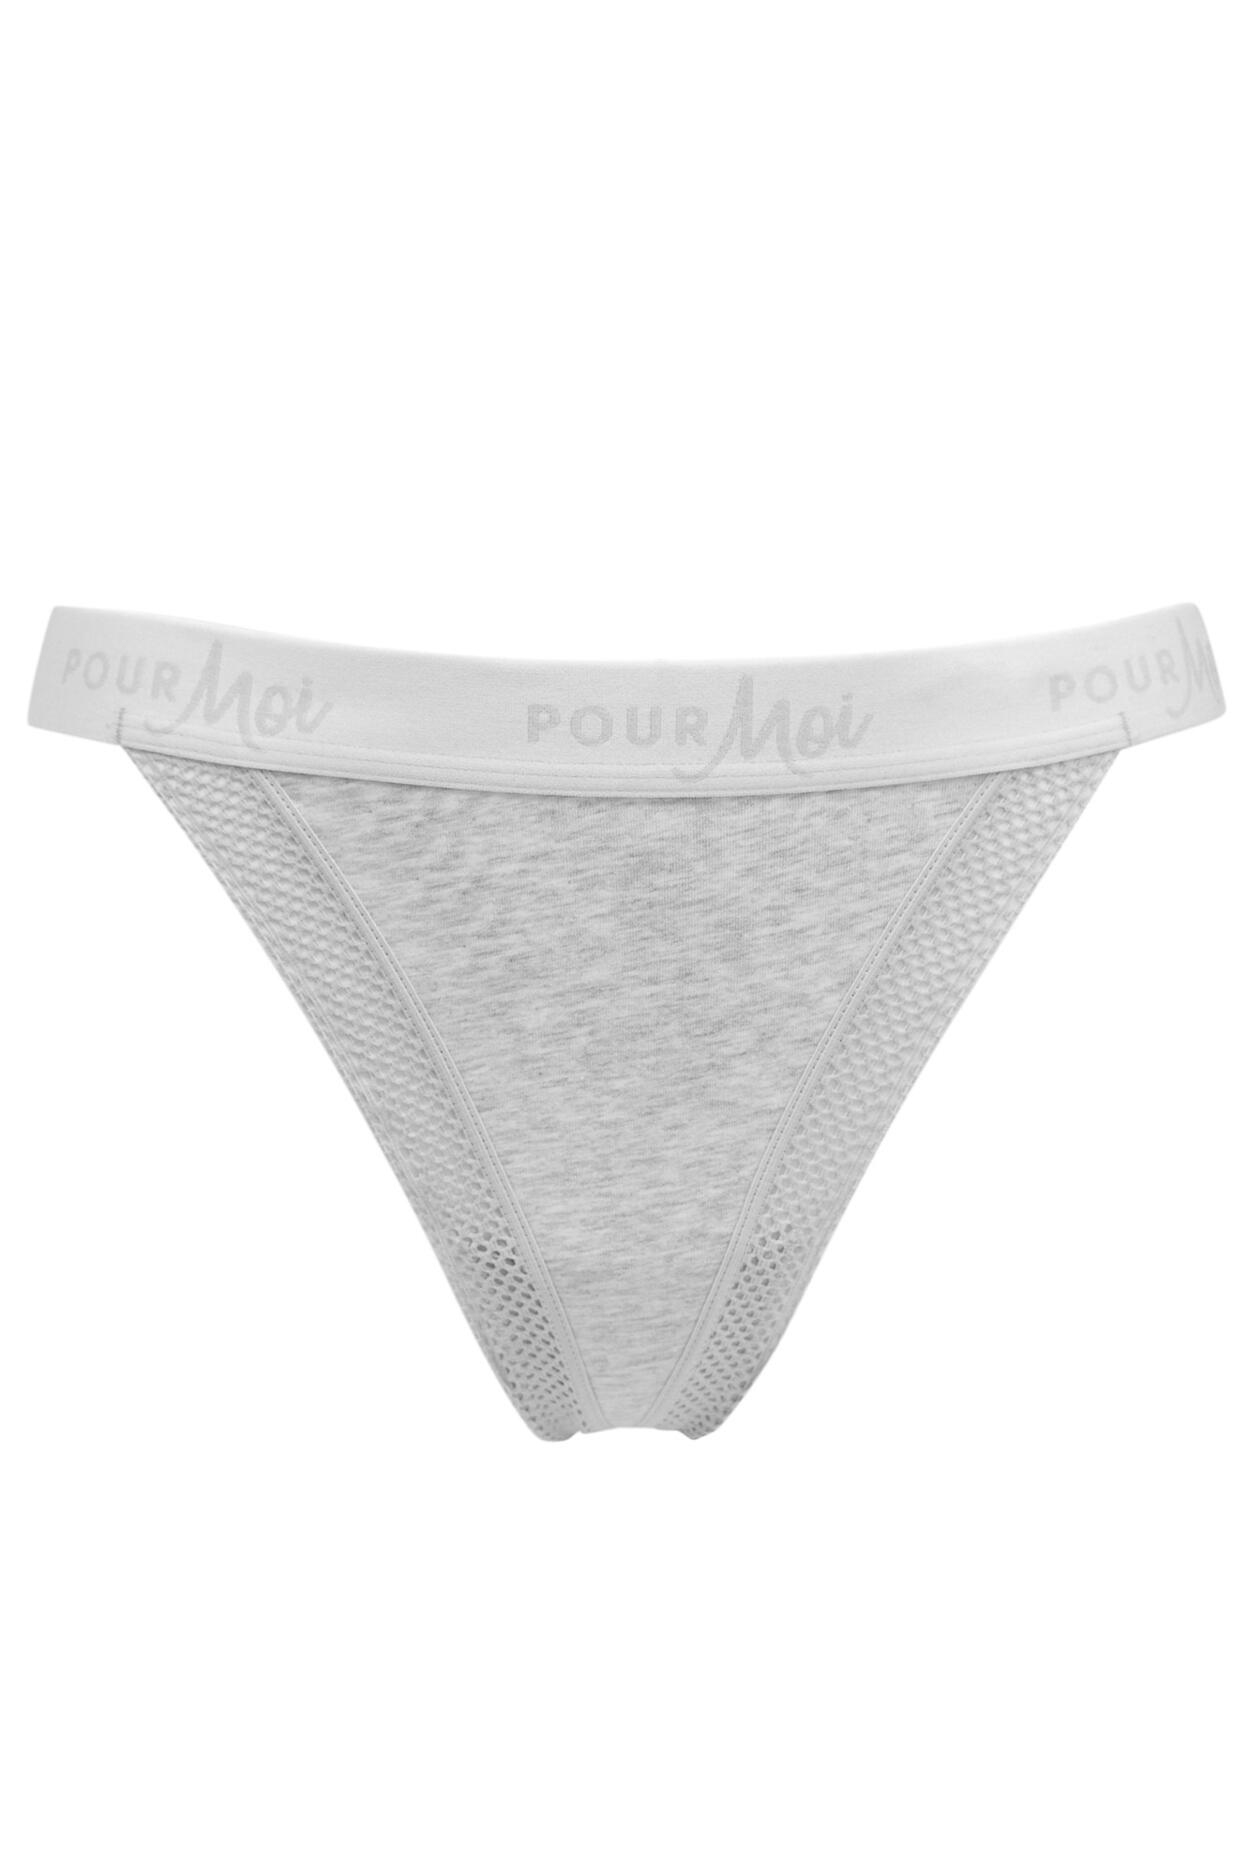 Love To Lounge Logo Cotton Thong | Grey Marl | Pour Moi